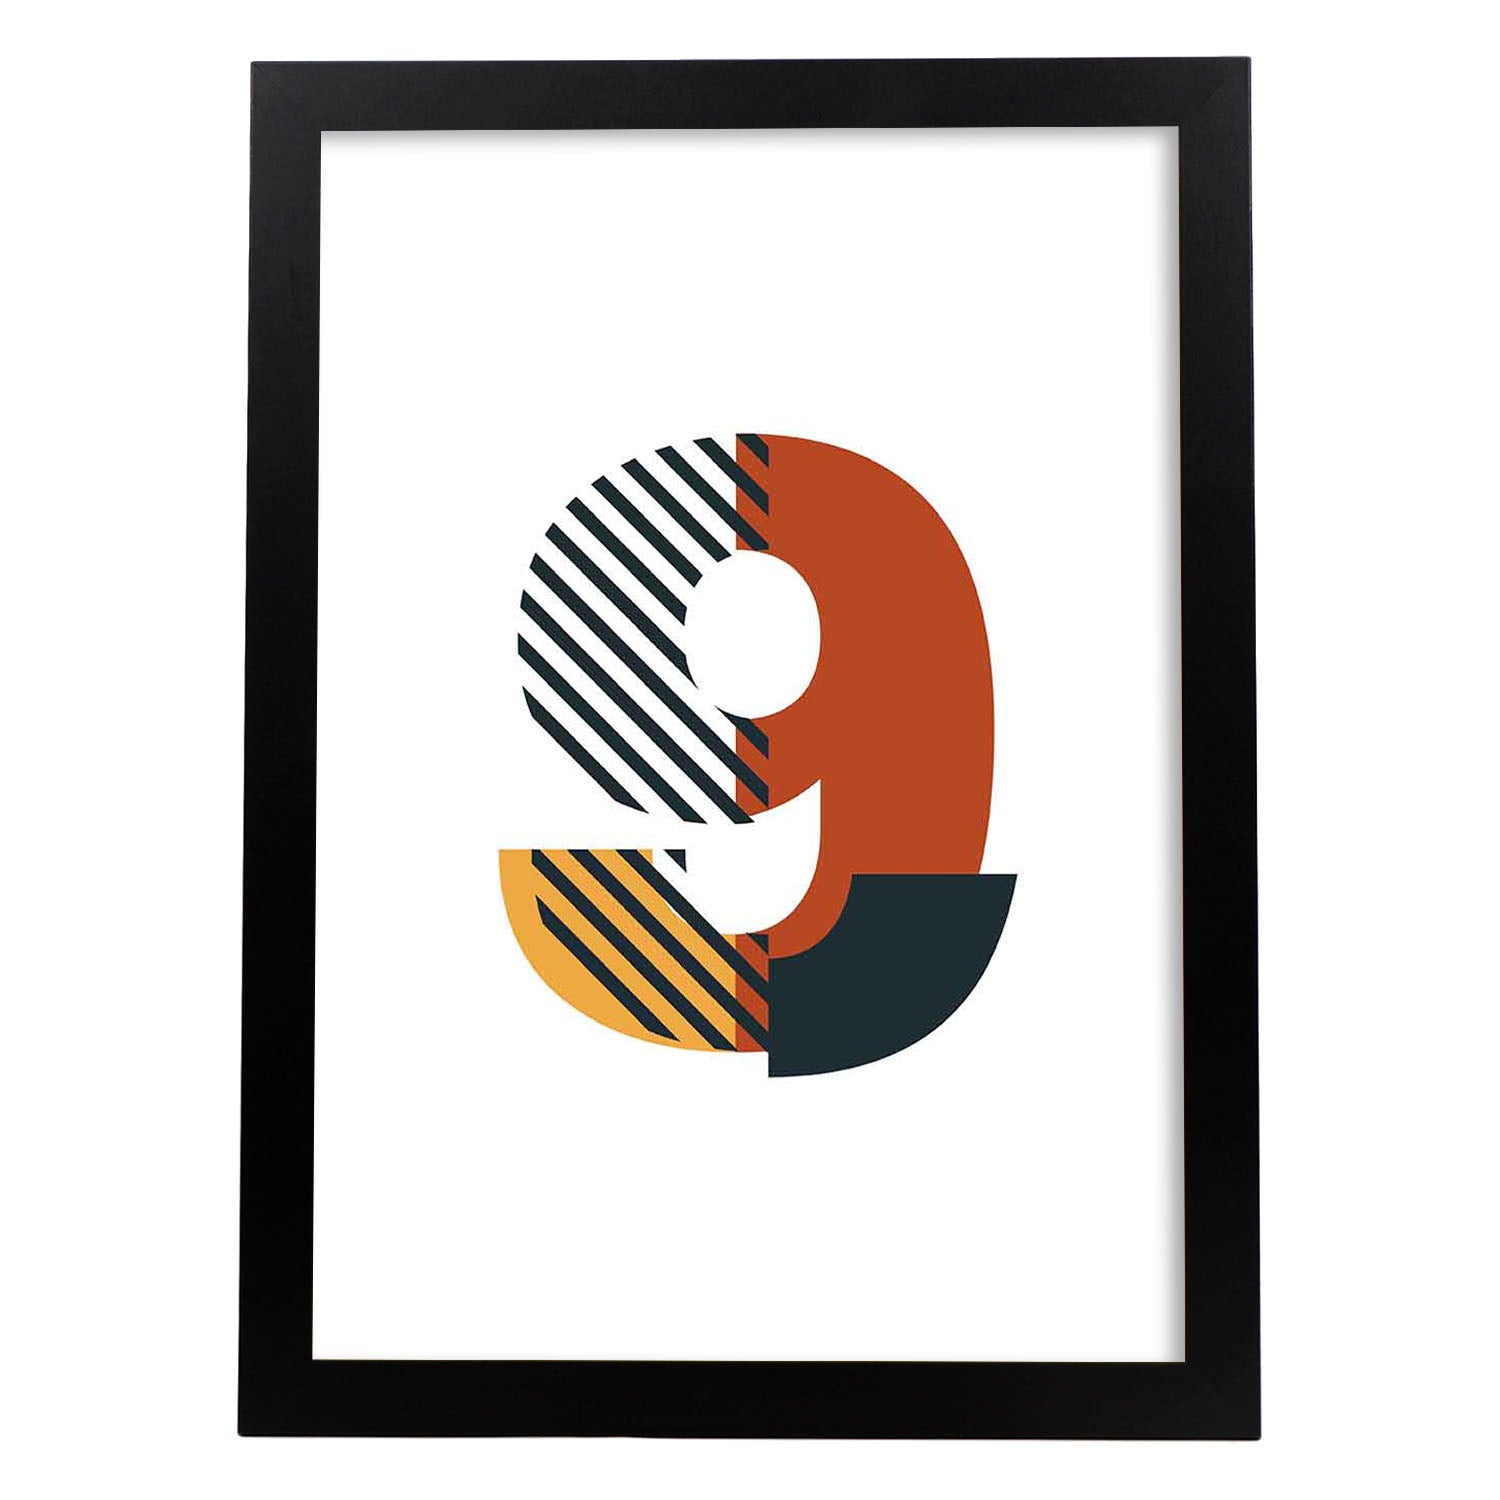 Poster de número 9. Lámina estilo Geometria con imágenes del alfabeto.-Artwork-Nacnic-A3-Marco Negro-Nacnic Estudio SL